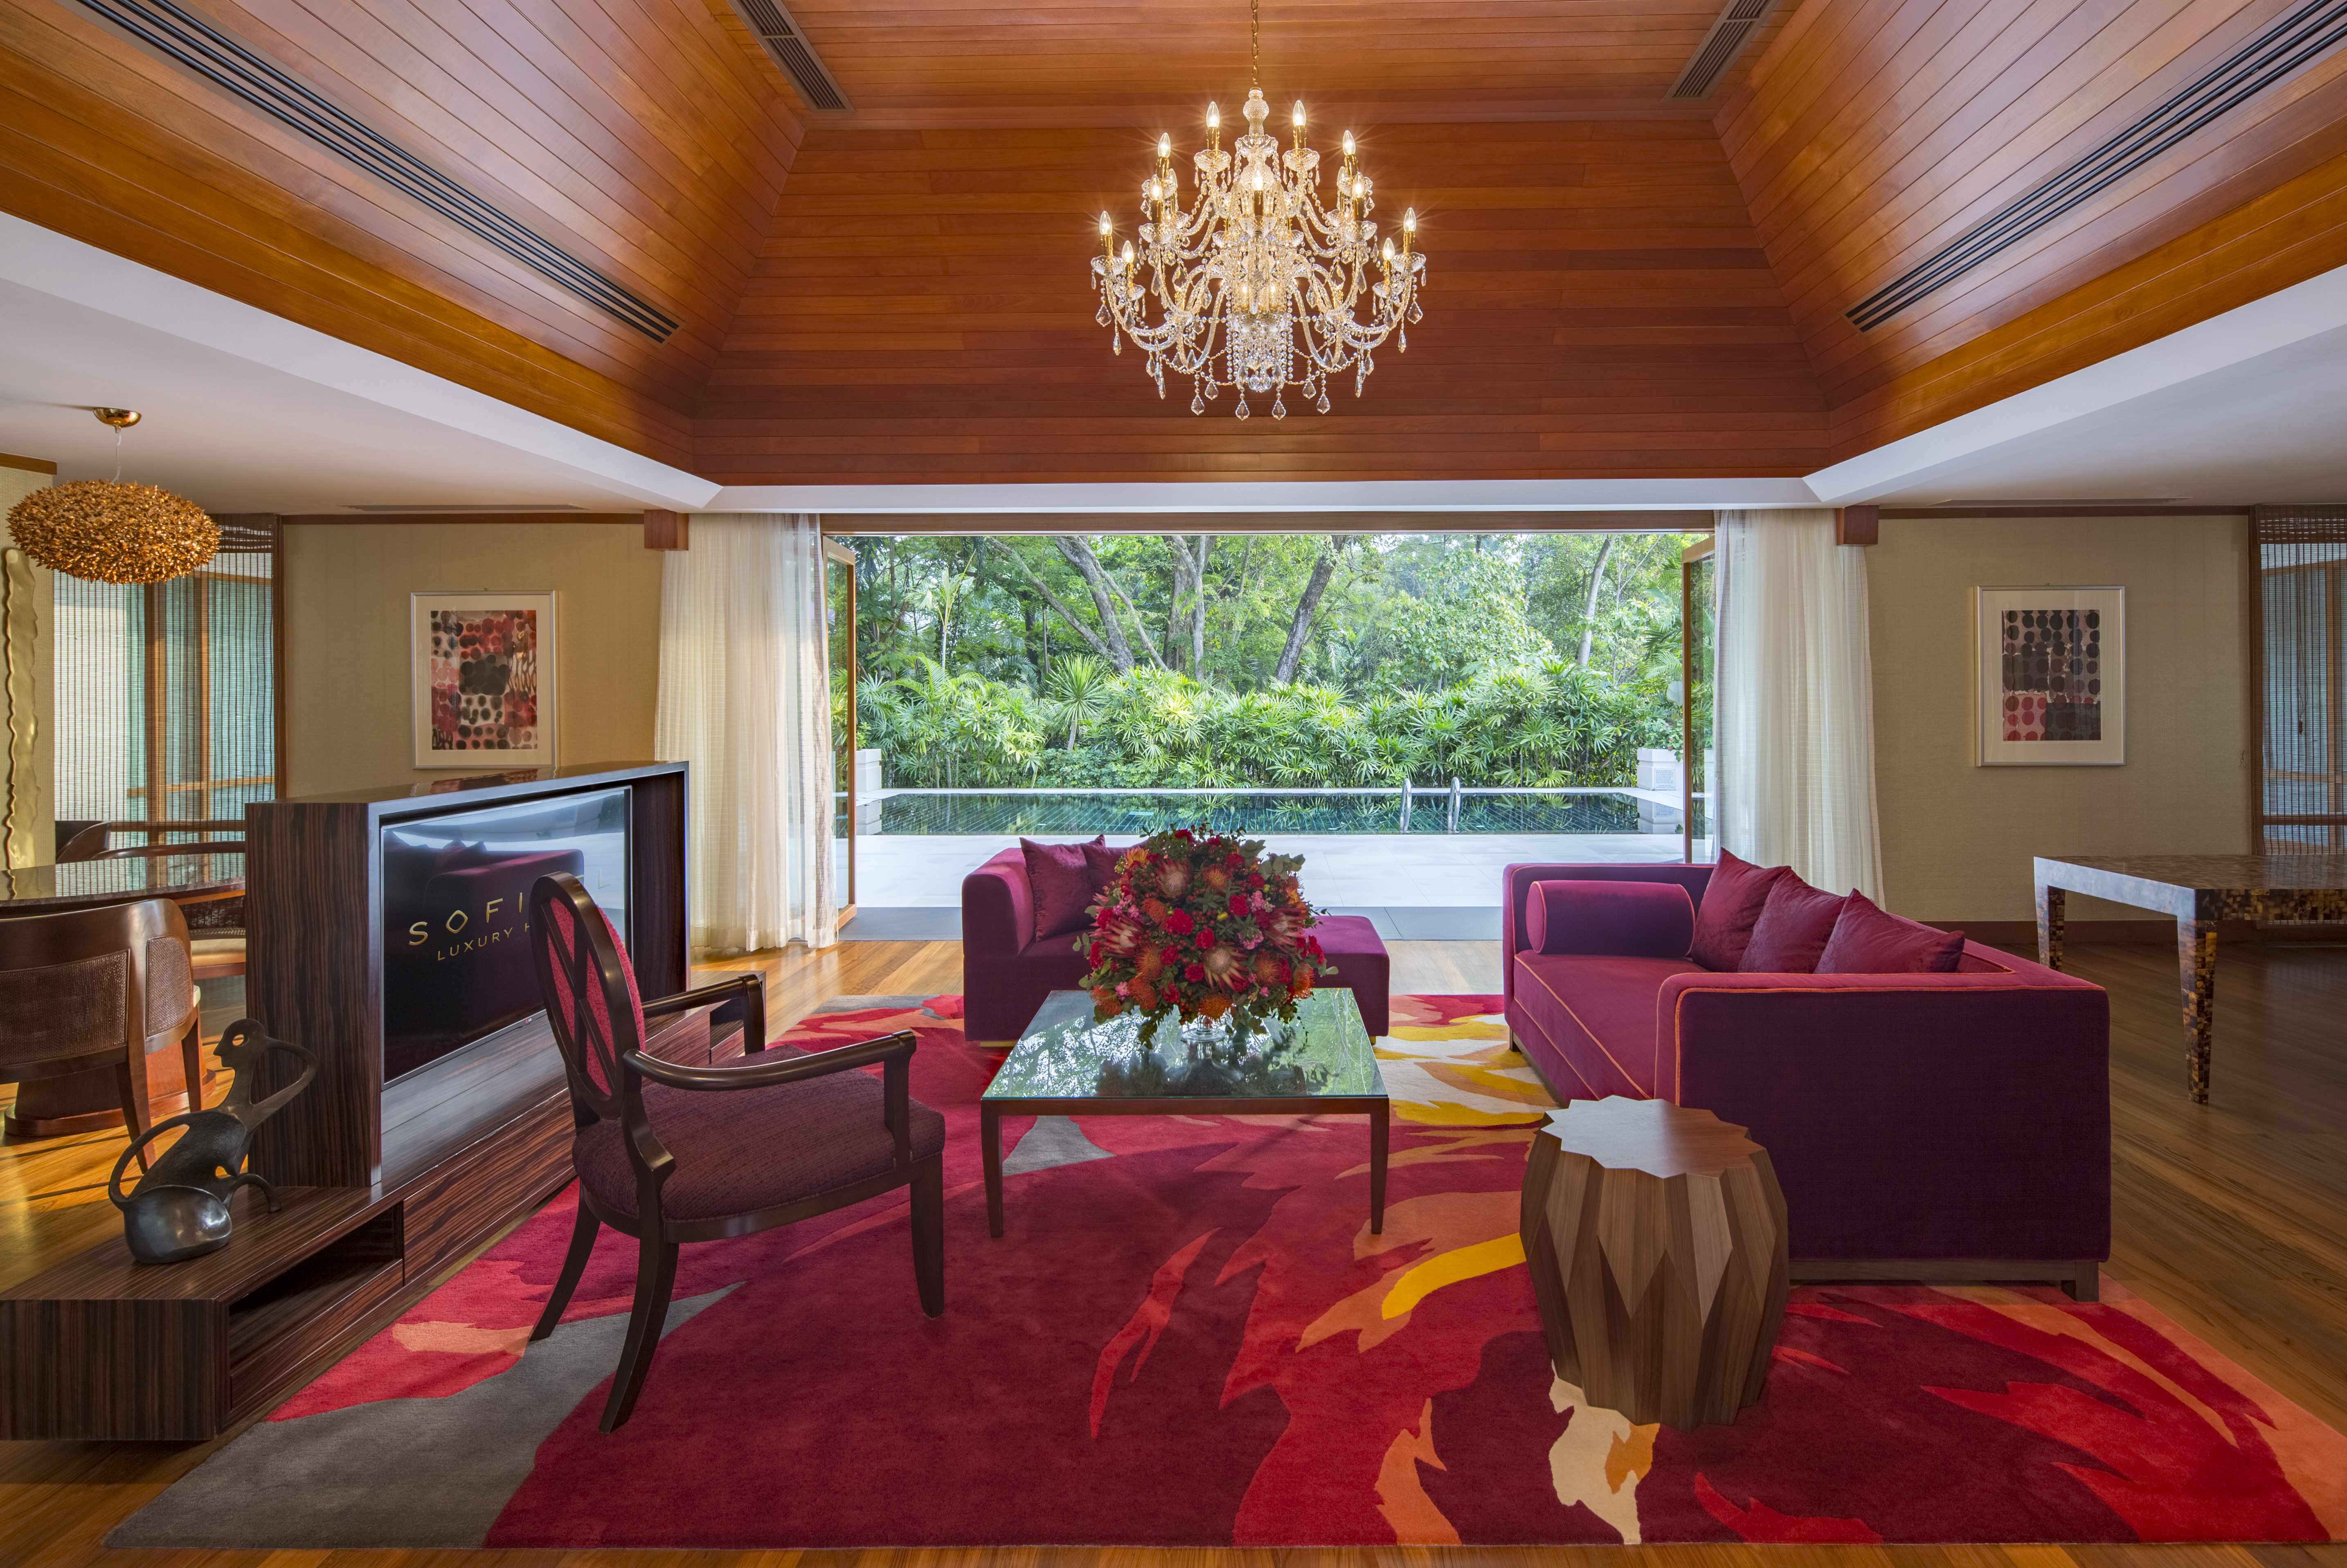 Sofitel-Singapore-Sentosa-Resort-Spa-venuerific-blog-villa-living-room